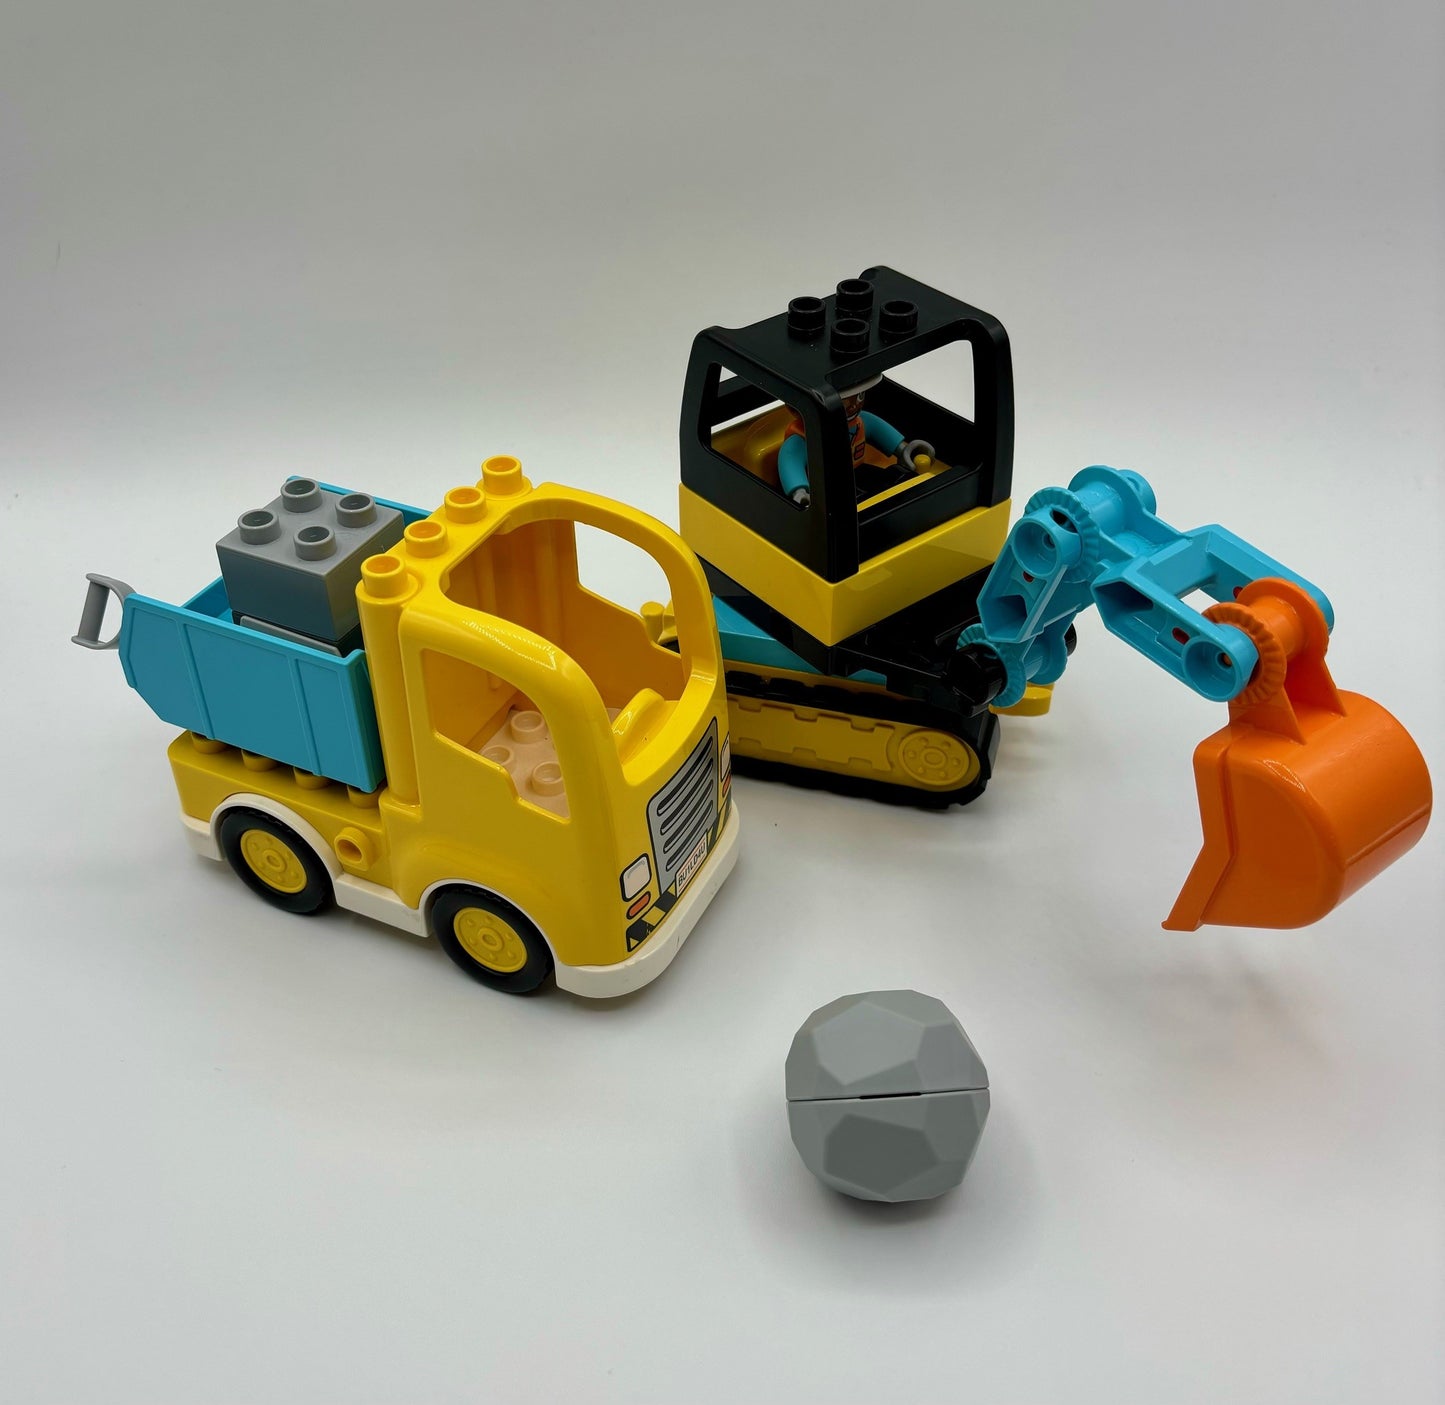 Lego Duplo Construction Vehicles.